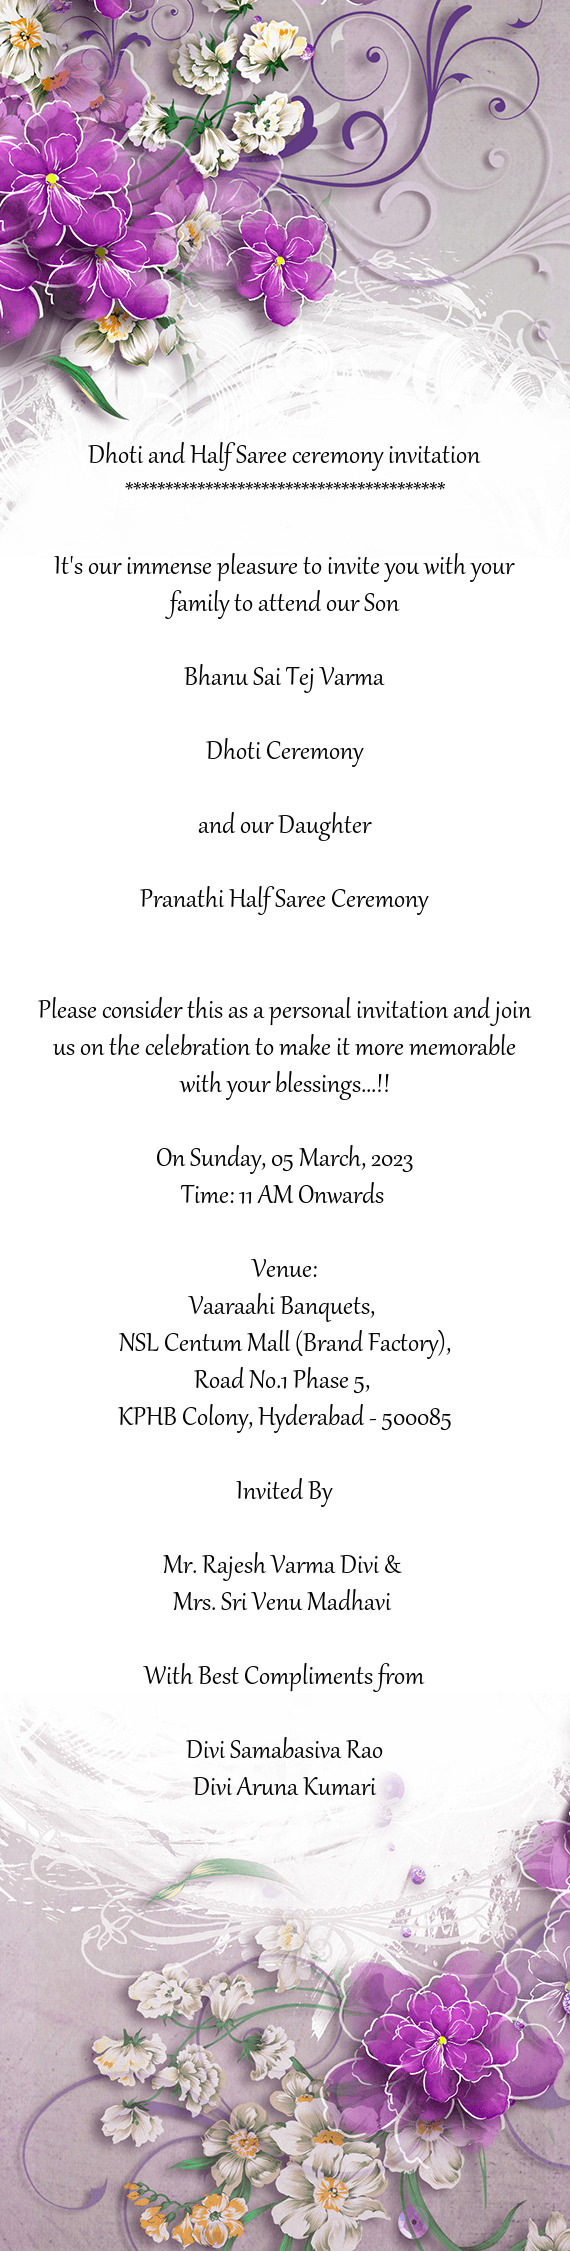 Pranathi Half Saree Ceremony